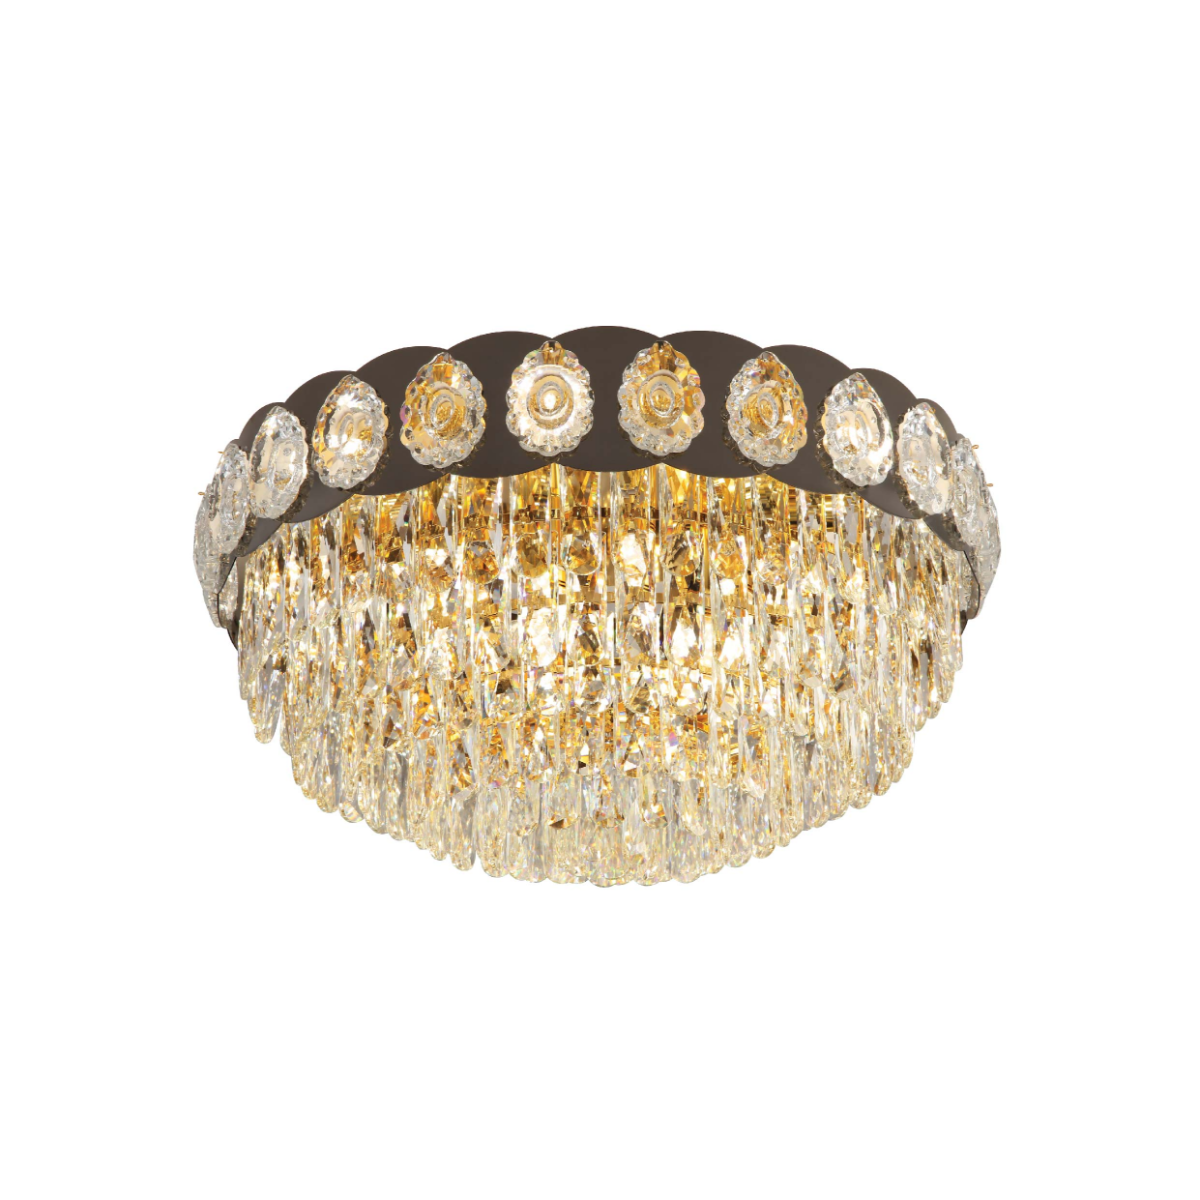 Main image of Luxury Clear Crystal Flush Modern Ceiling Chandelier Light Gold | TEKLED 159-18009